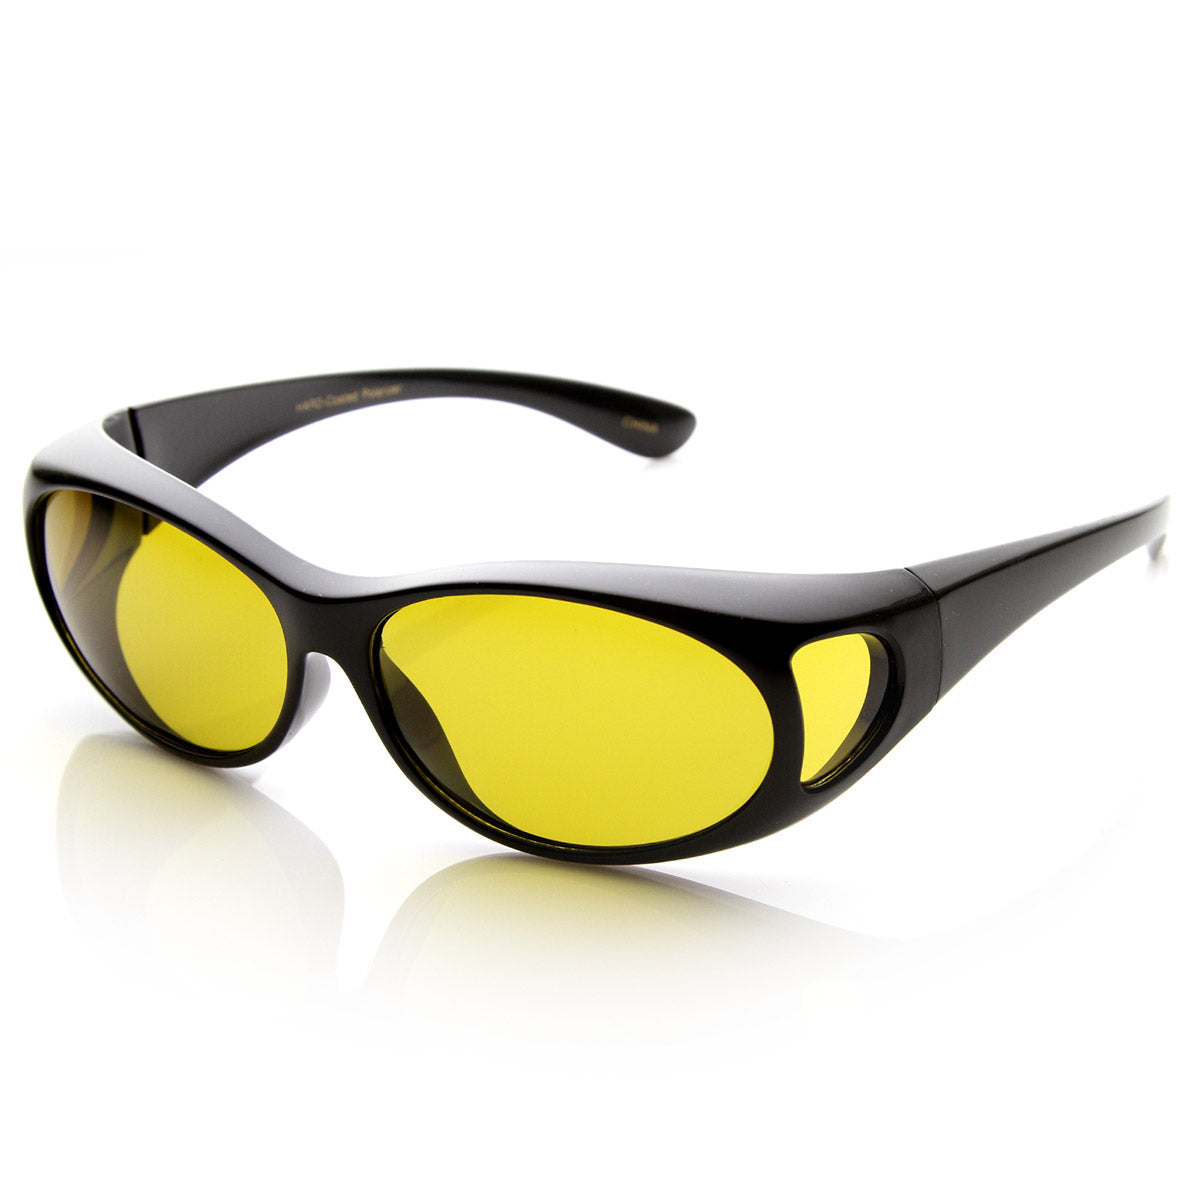 Polarized Rectangular Aviator Sunglasses for Men in Shiny Black / Solid Grey - Circle Sunglasses - Eyewear for Driving UV 400 Protection